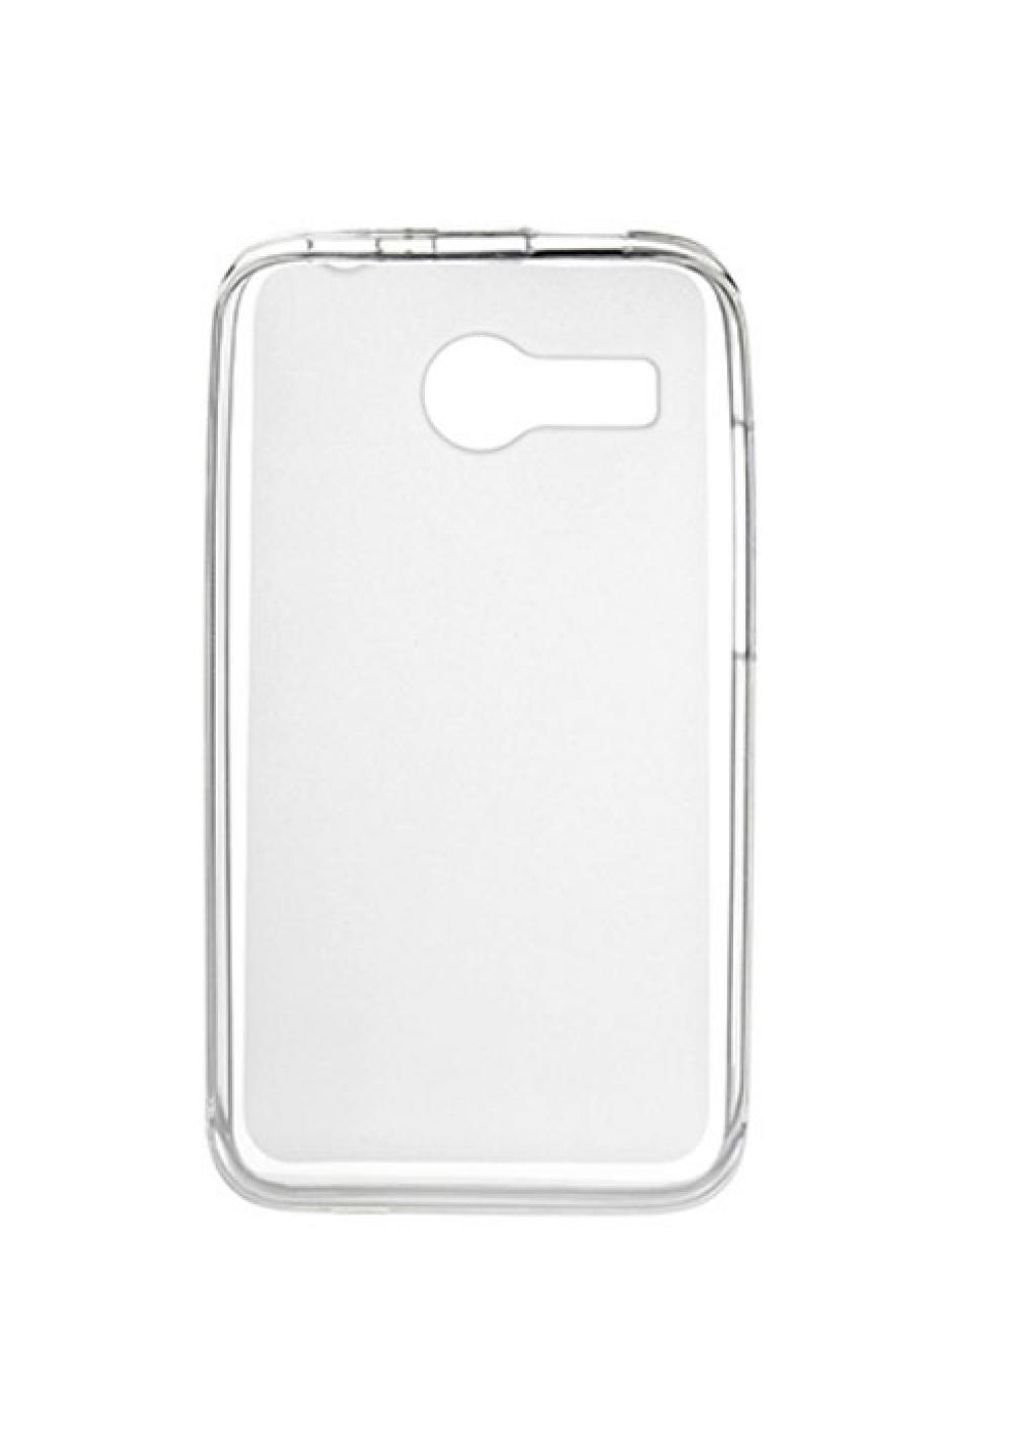 Чехол для мобильного телефона (смартфона) для Lenovo A316 (White Clear) Elastic PU (211474) Drobak (201493582)